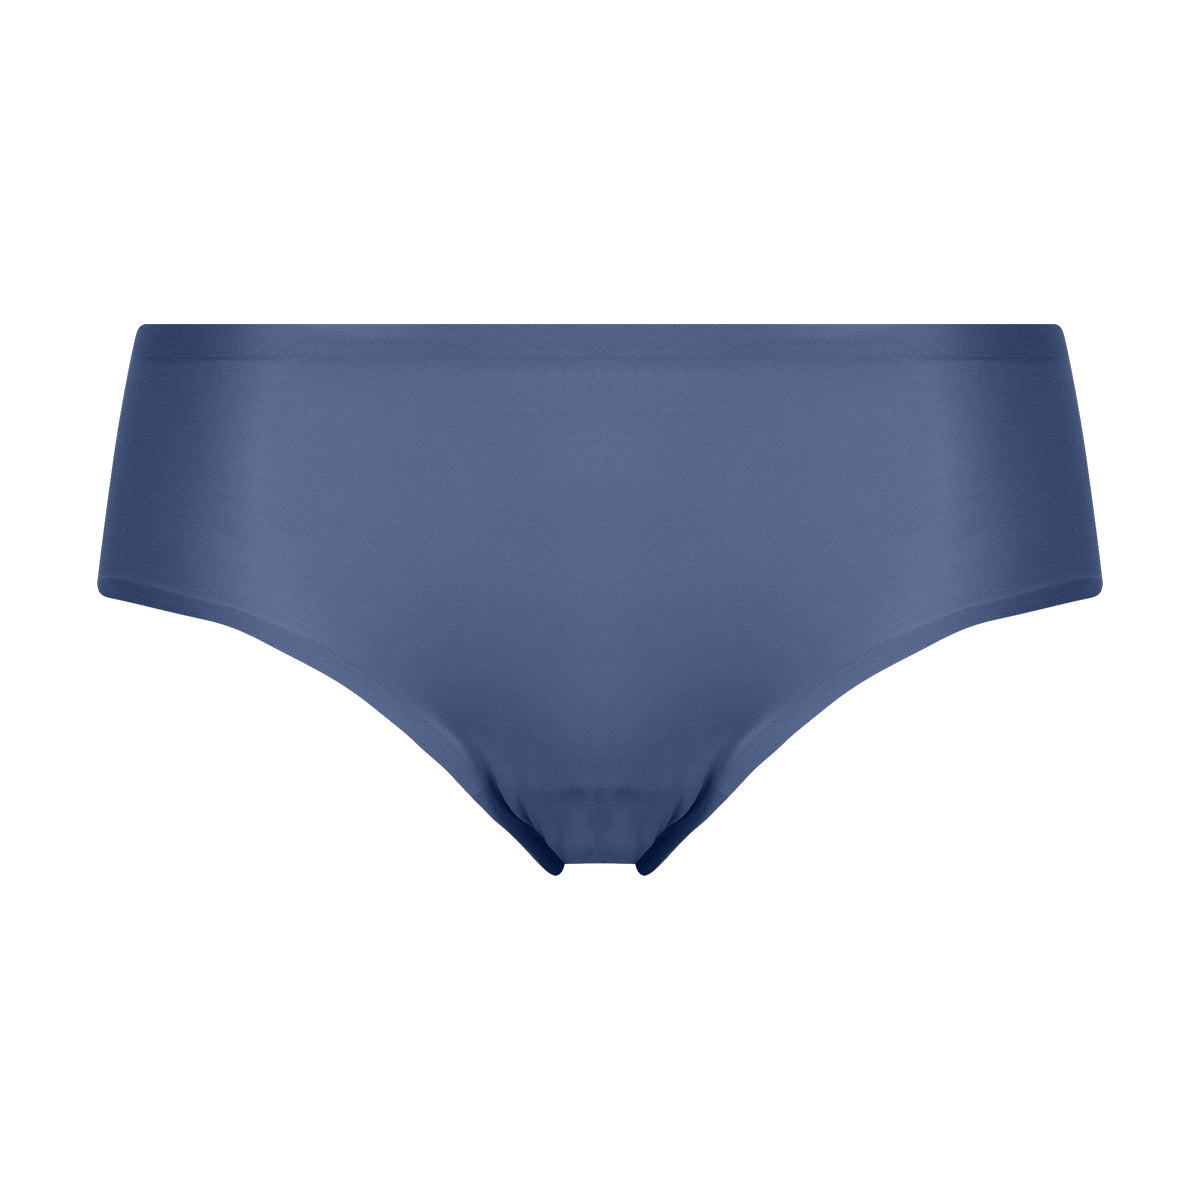 Chantelle Panties Thong Underwear Greyish Blue Lace Sz Large NWOT